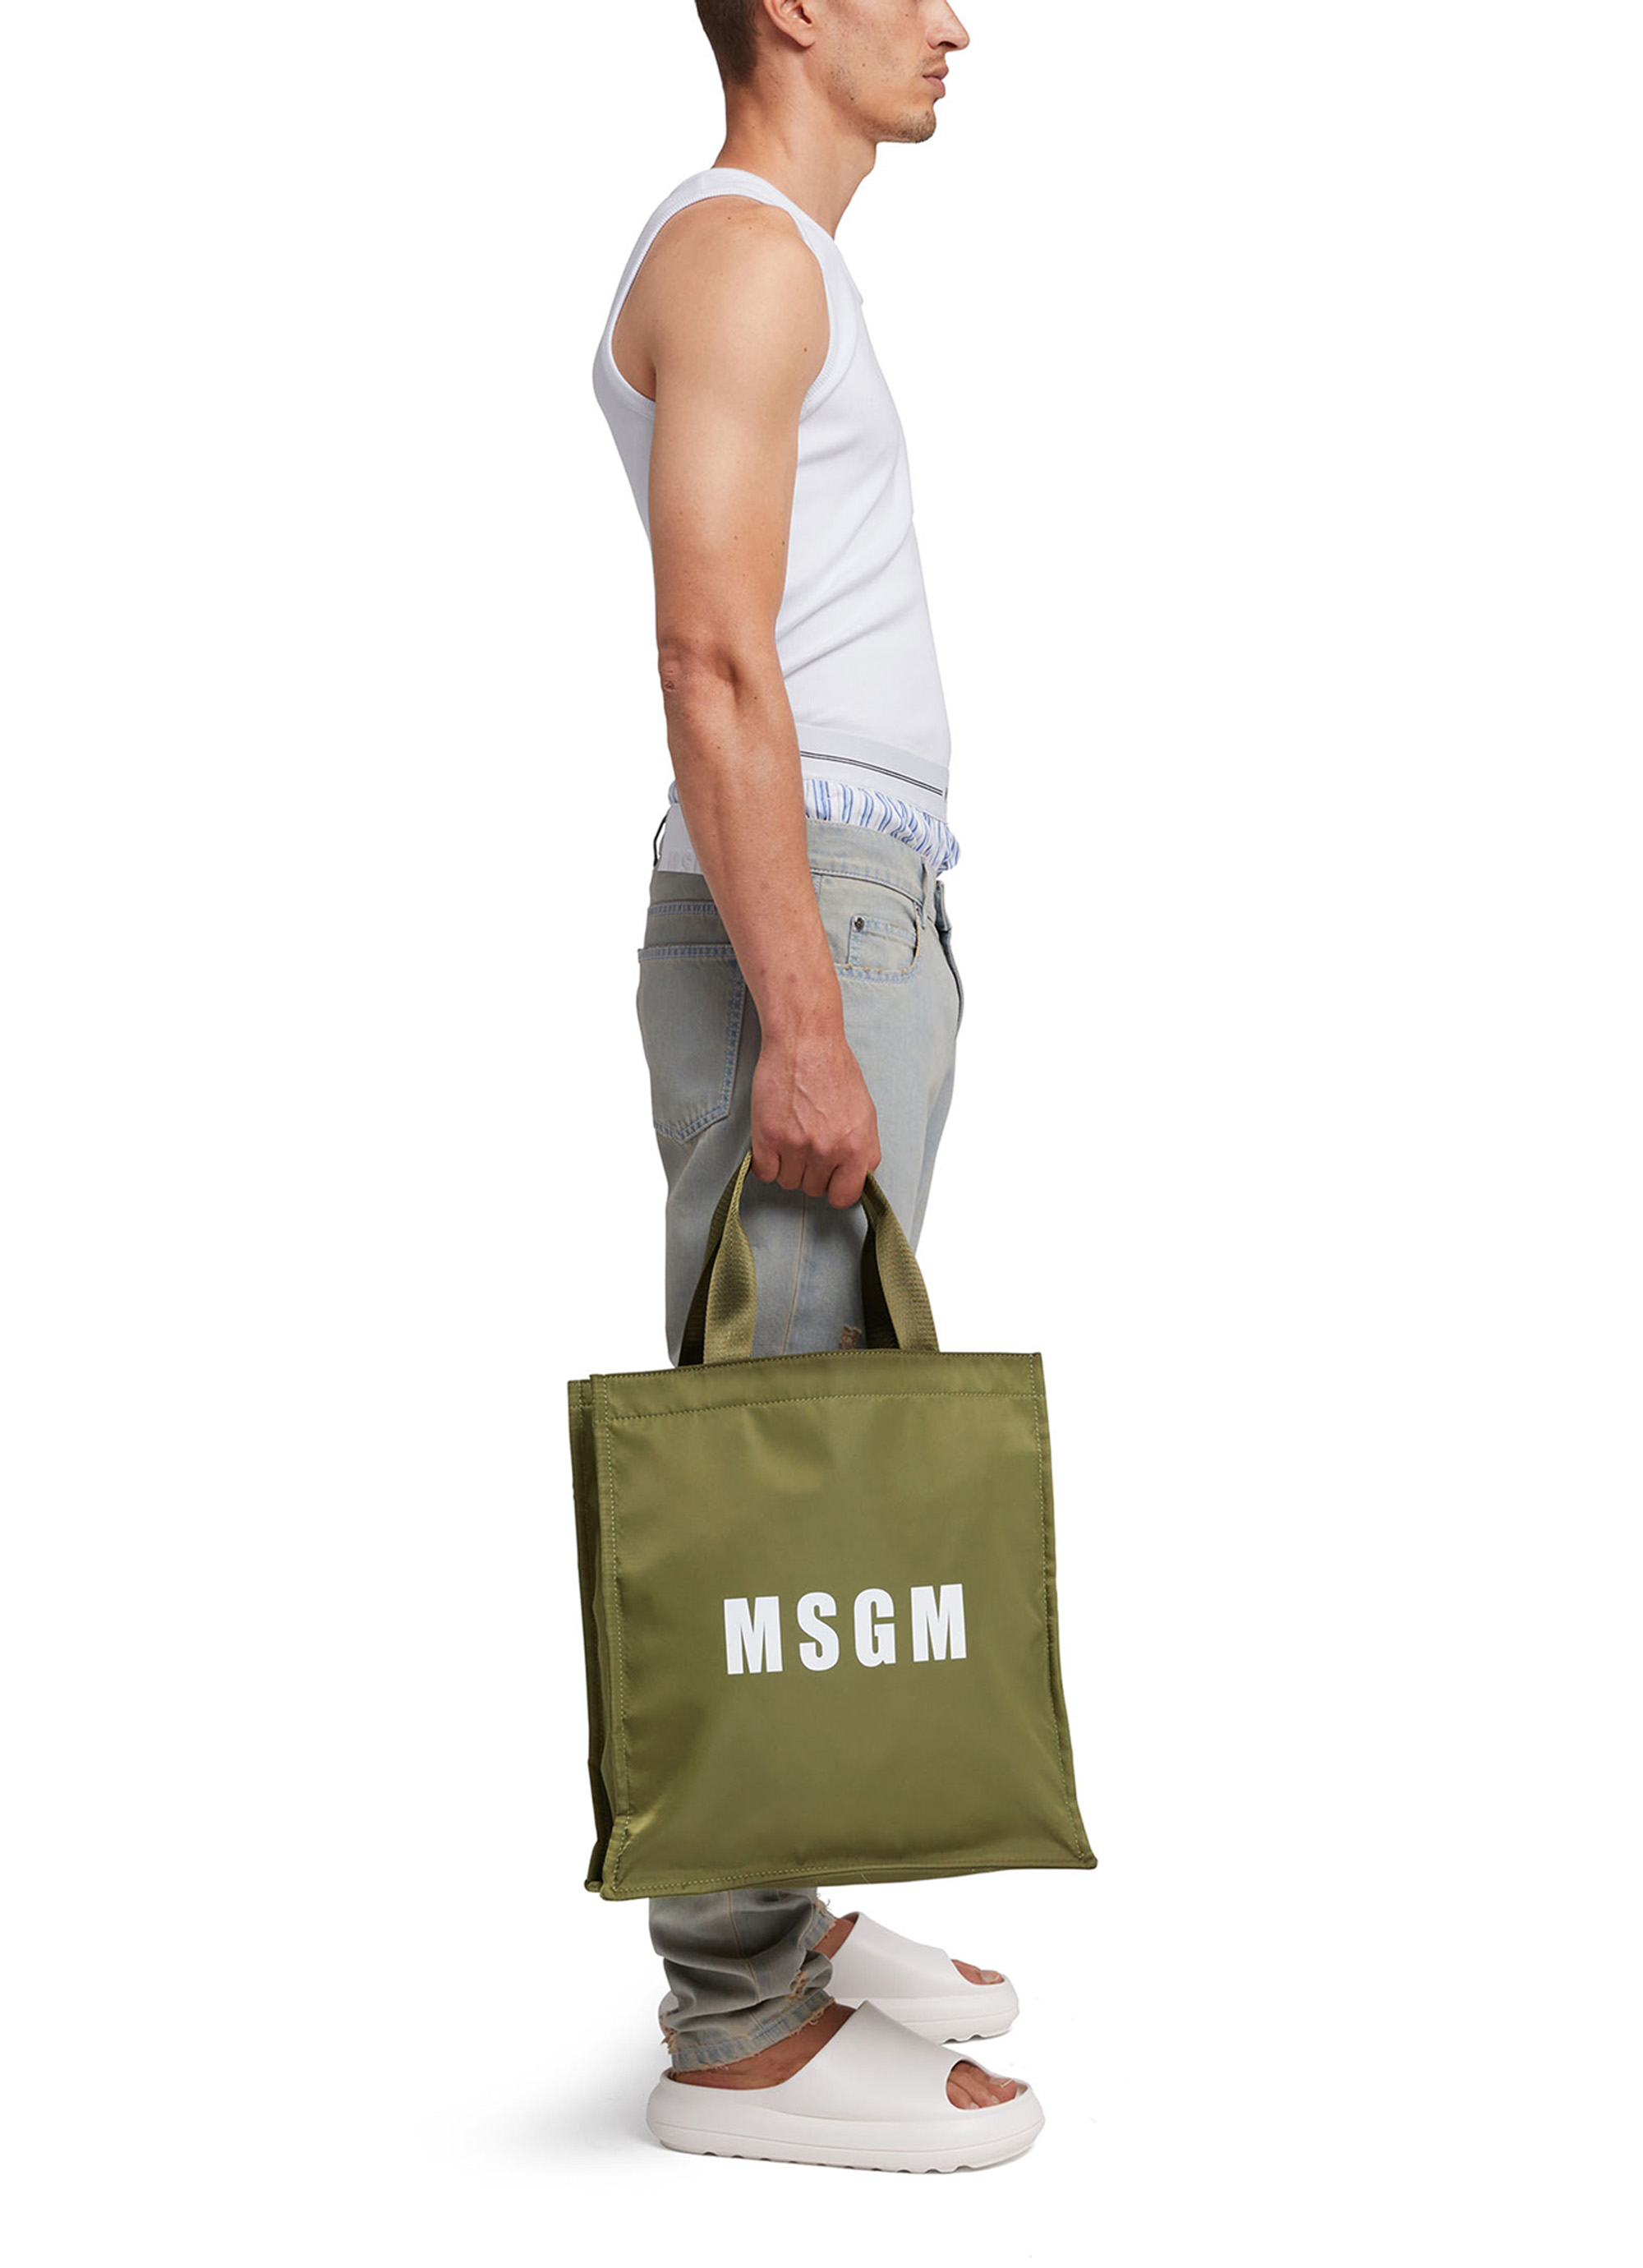 MSGMの商品画像